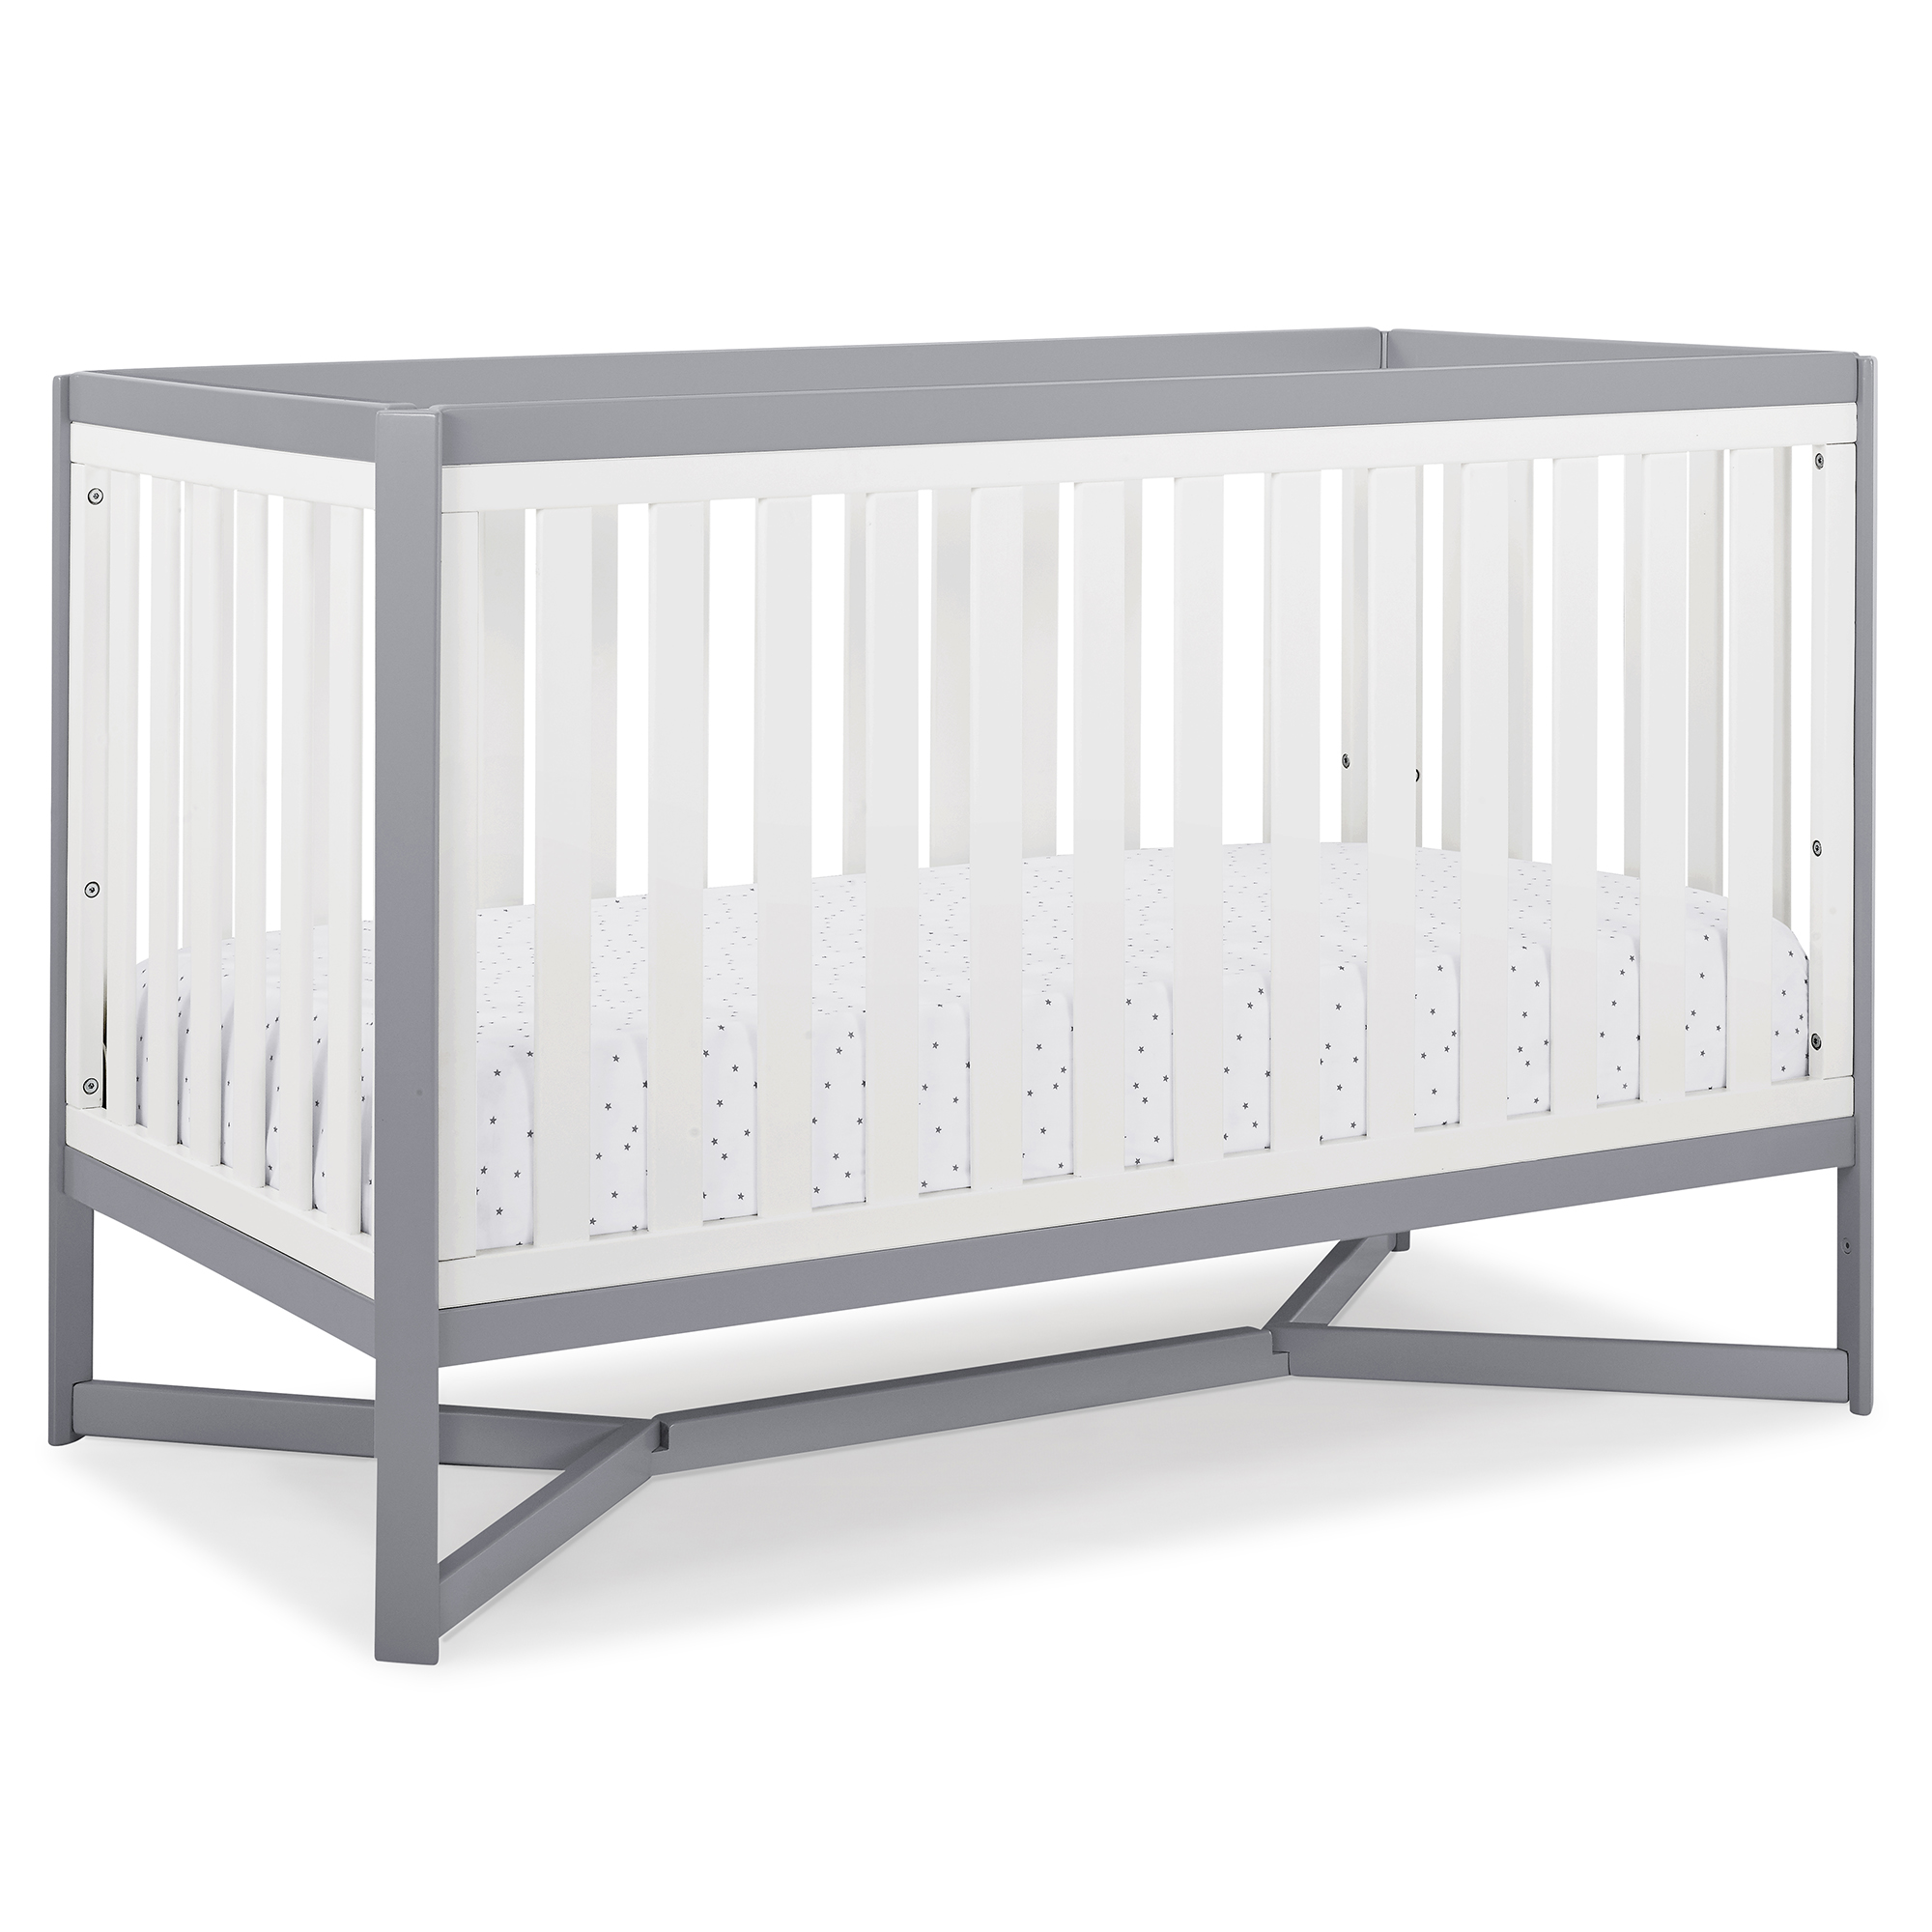 Delta Children Tribeca 4-in-1 Convertible Crib, Greenguard Gold Certified, White/Gray - image 1 of 14